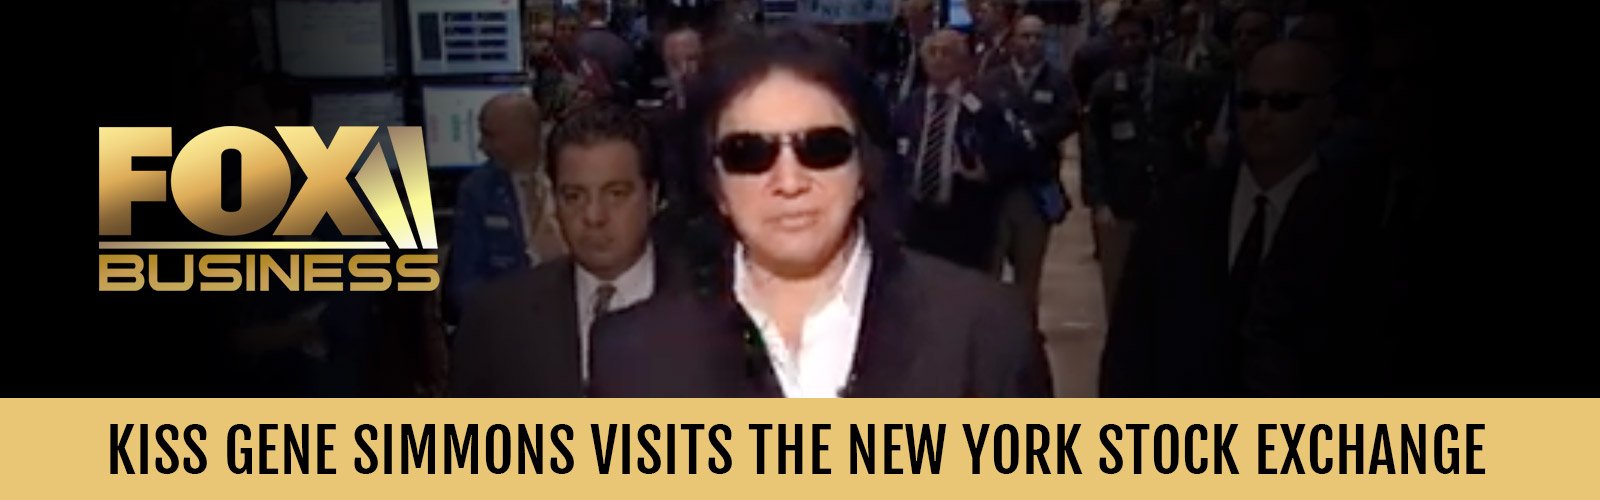 KISS Gene Simmons visits the New York Stock Exchange